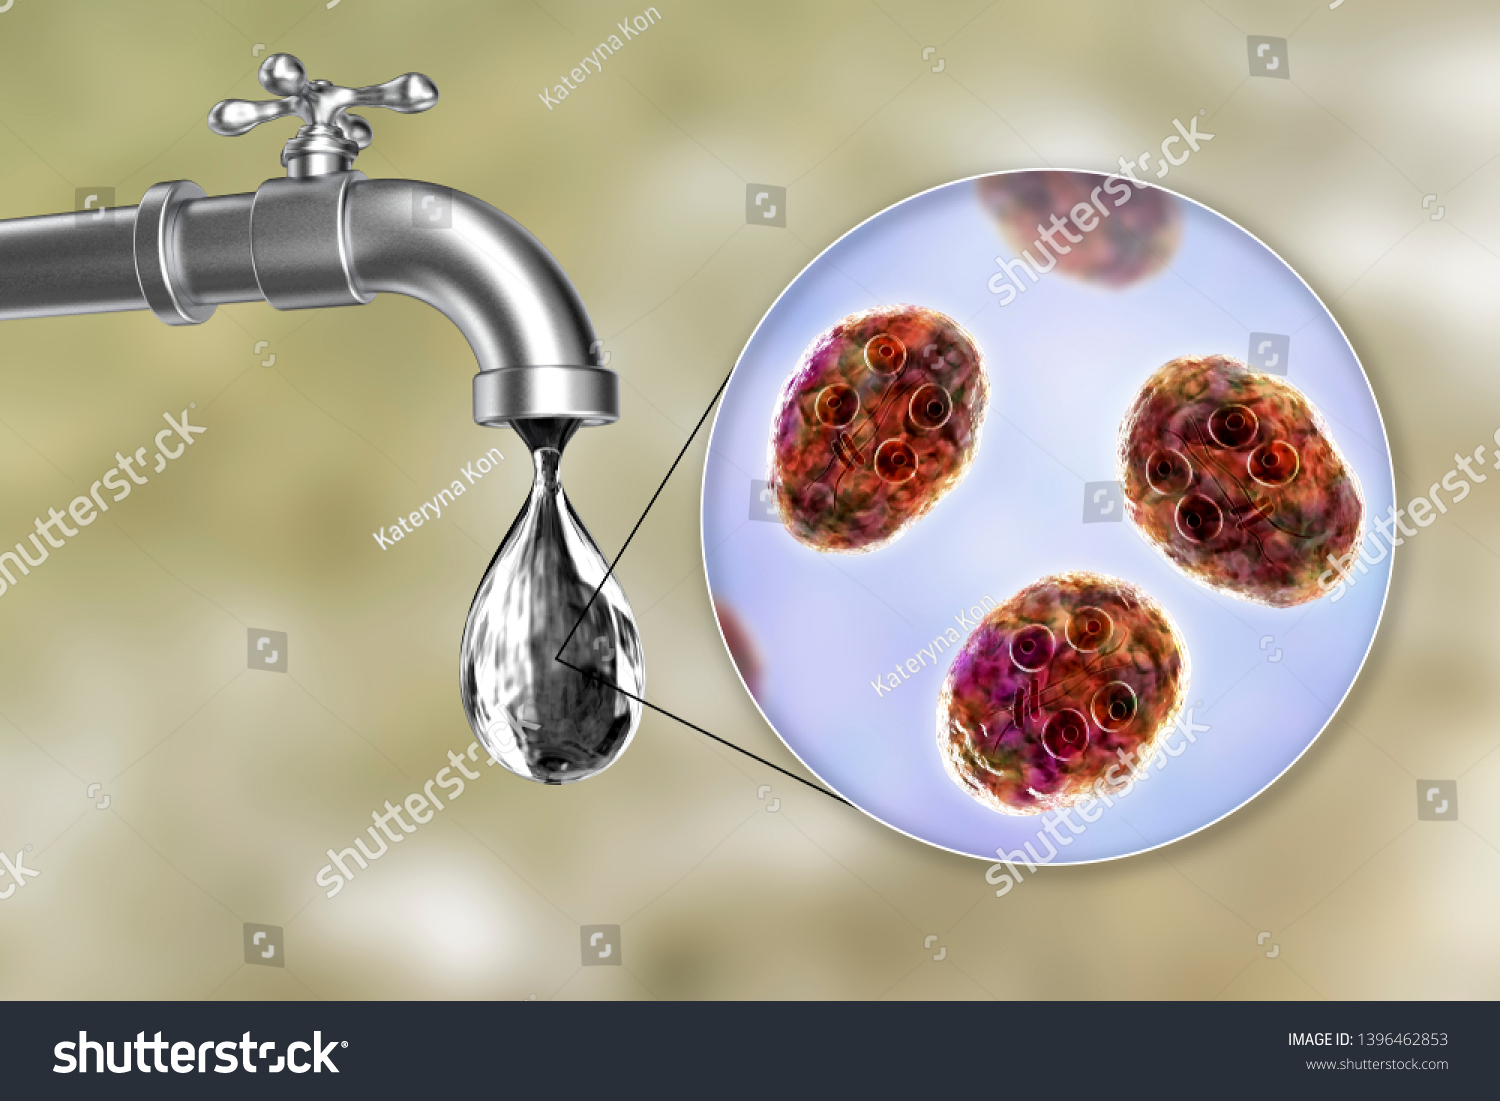 tap water diarrhea